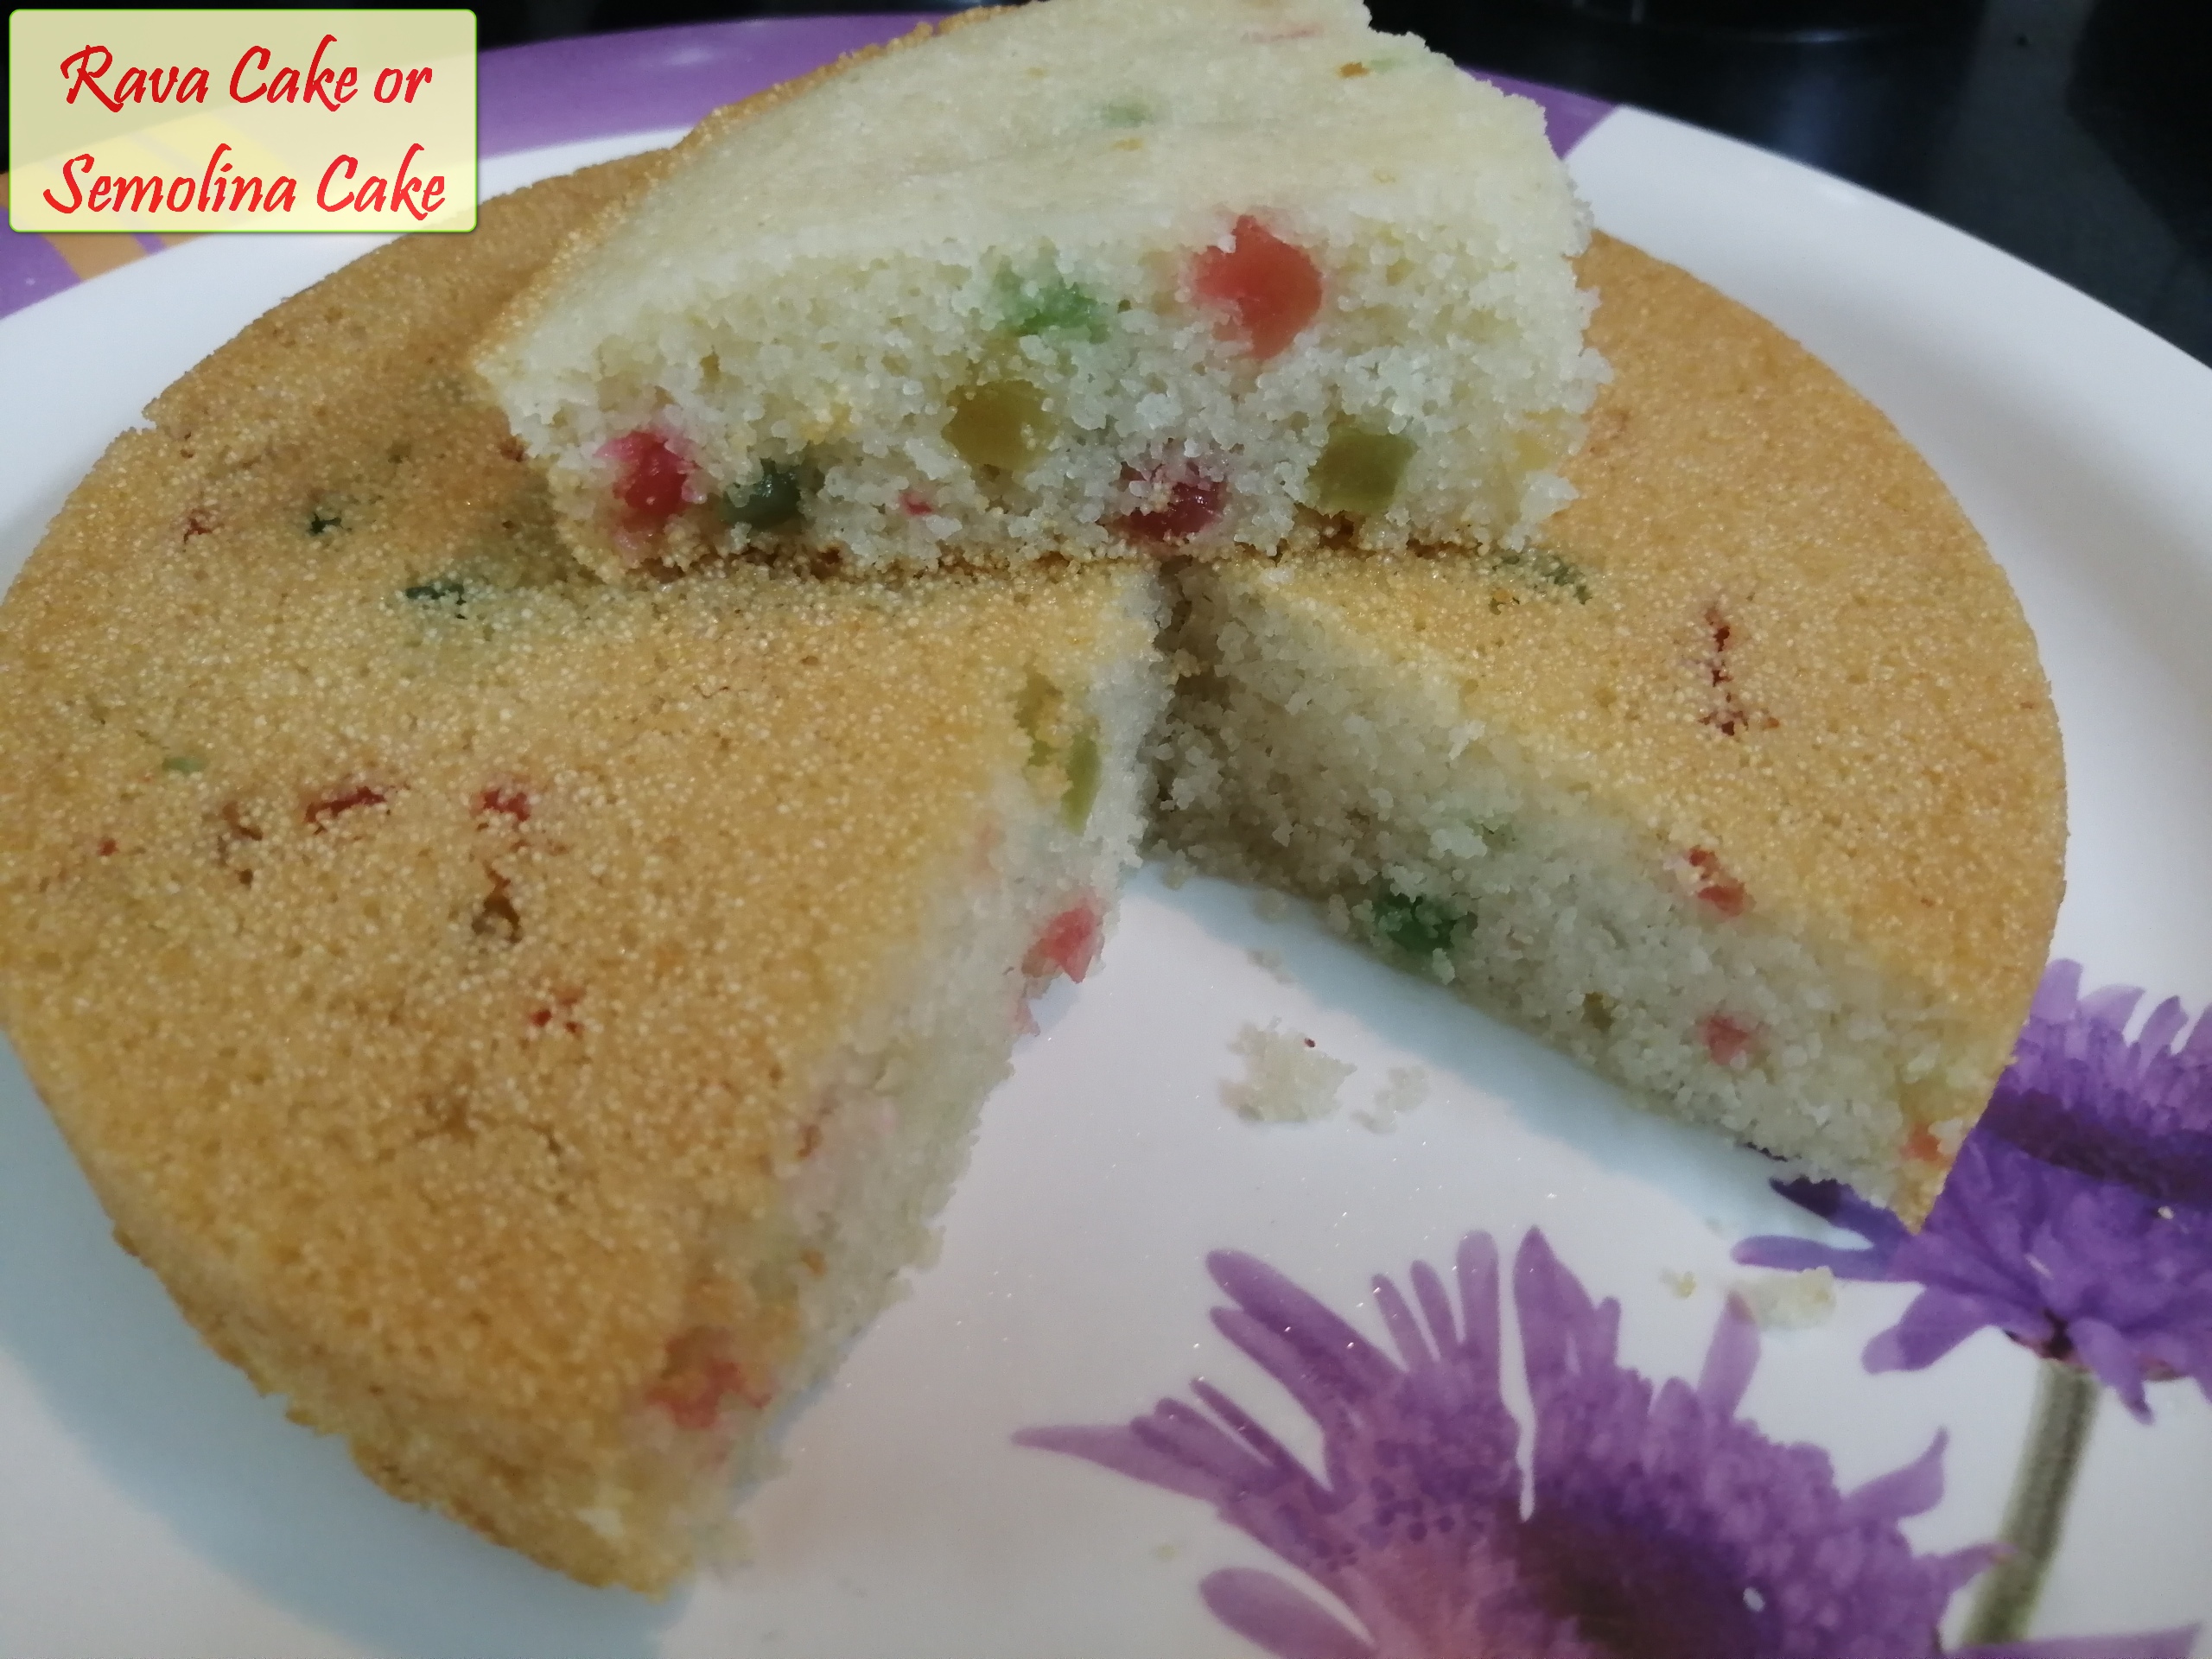 Eurasian Sugee Cake (a Semolina and Almond Cake)